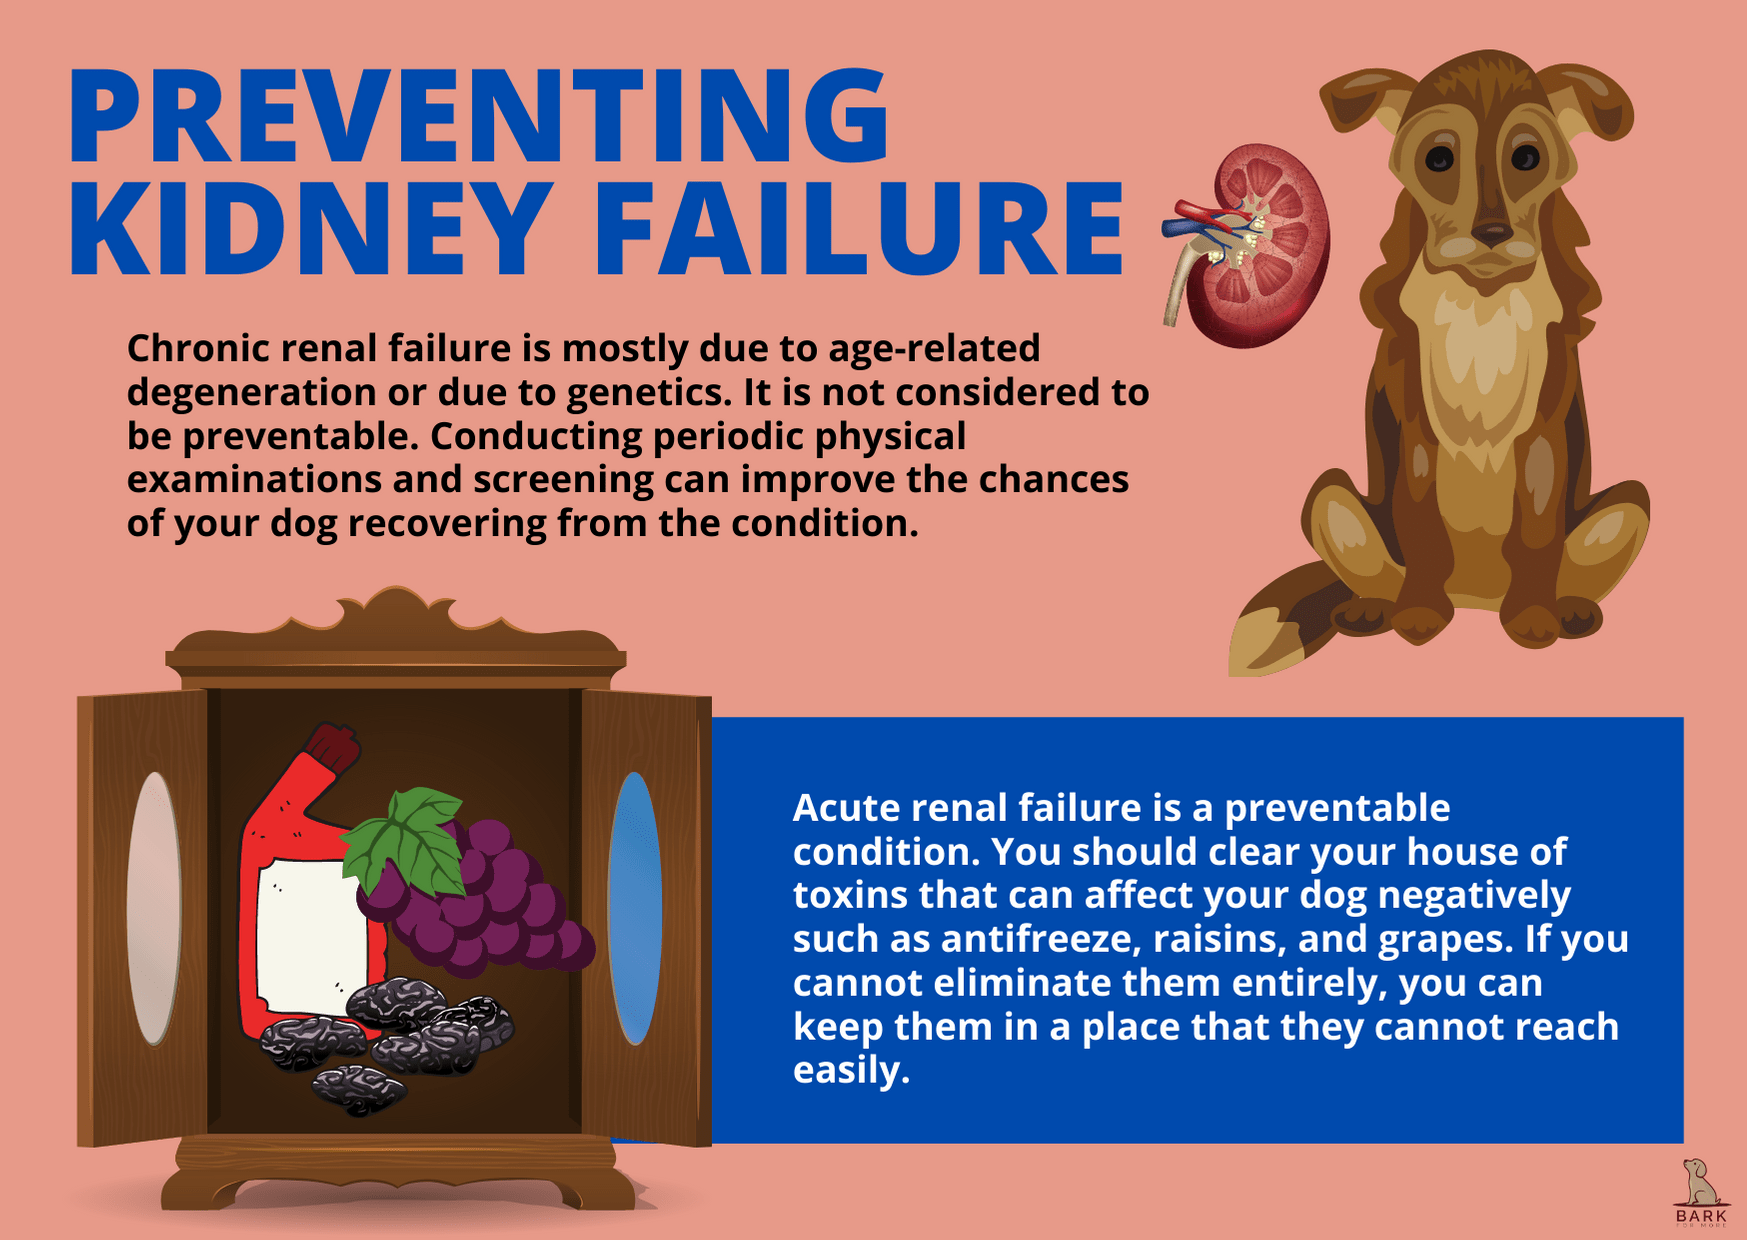 Preventing kidney failure